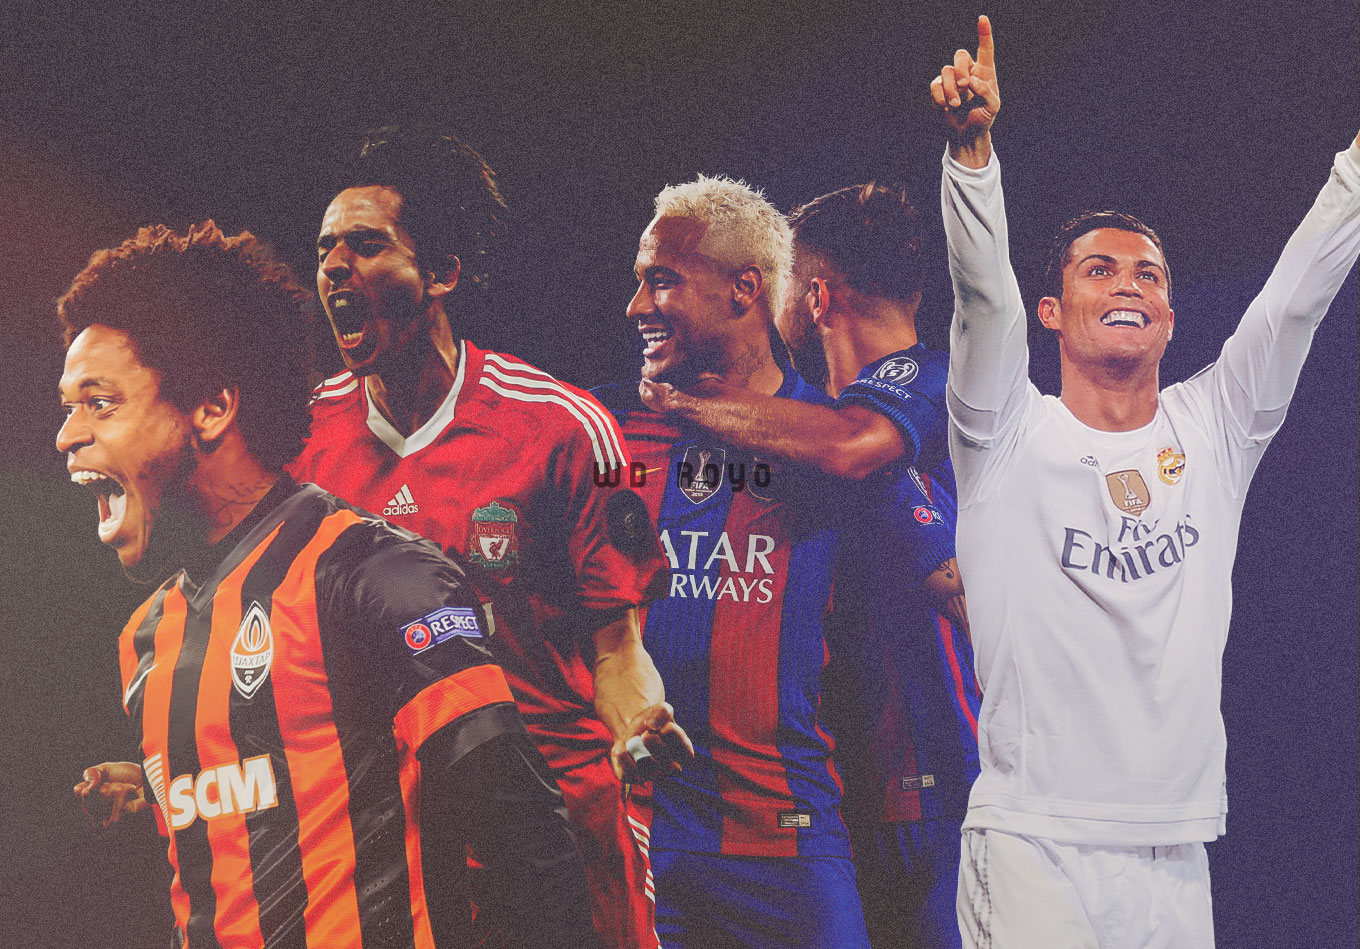 Key Moments in UEFA Champions League History